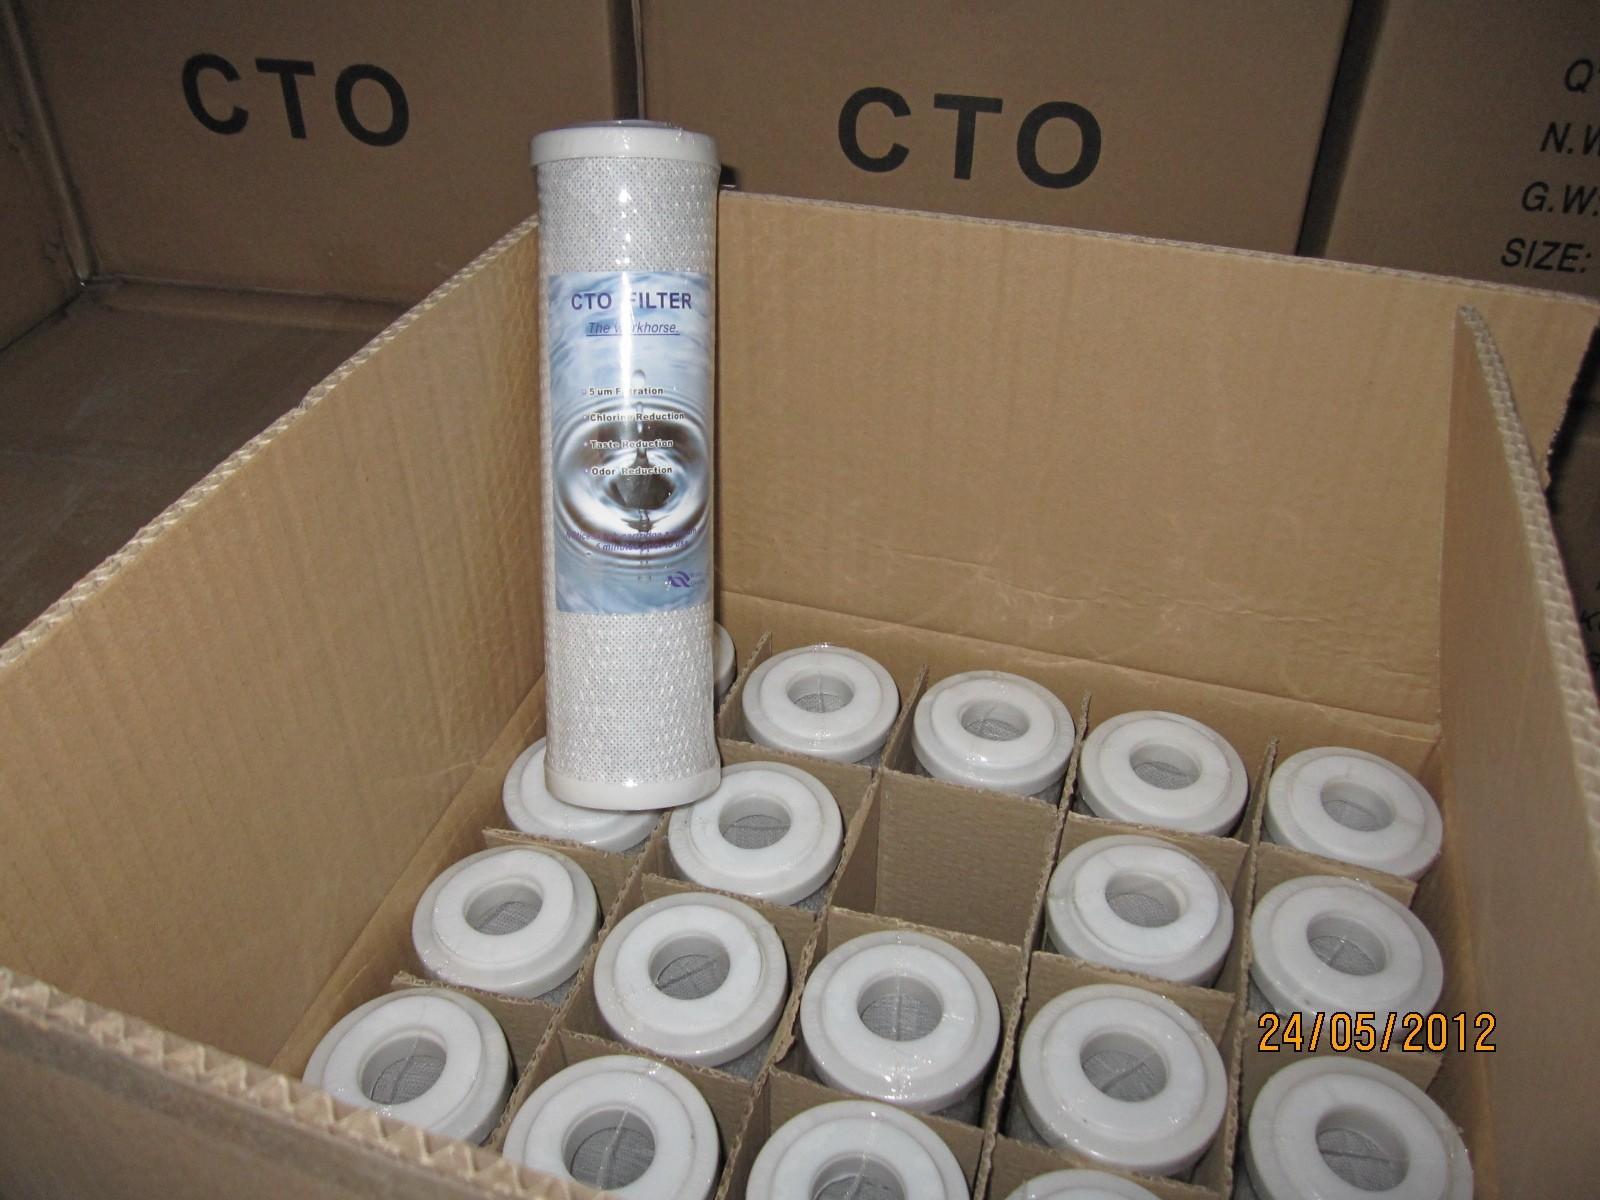 Ocpuritech wound polypropylene water filter cartridge inquire now for medicine